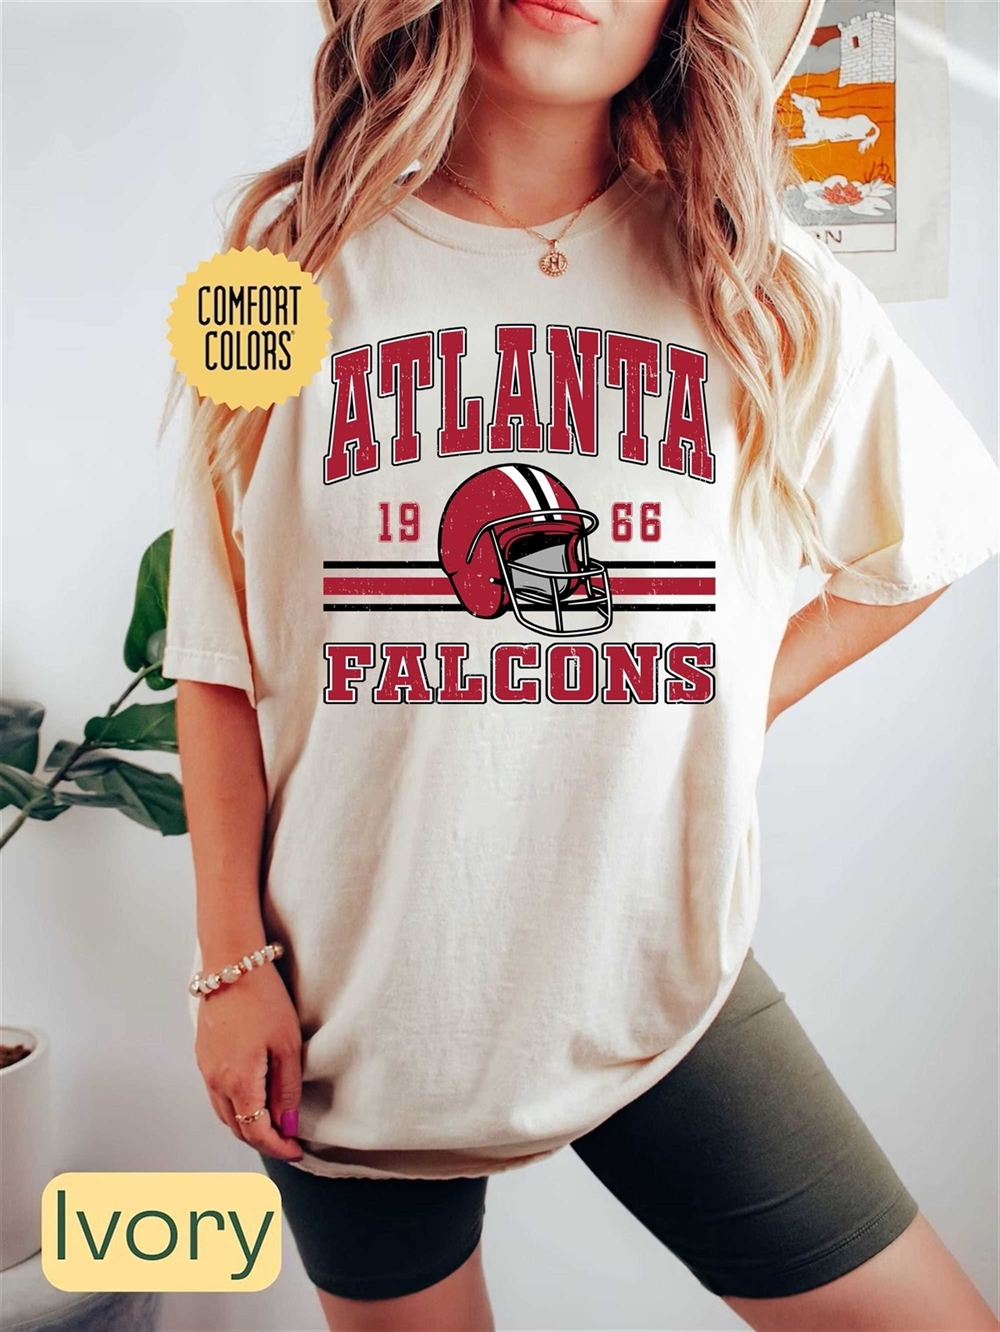 Atlanta Football Comfort Colors Shirt Trendy Vintage Retro 80s Style Football Tshirt